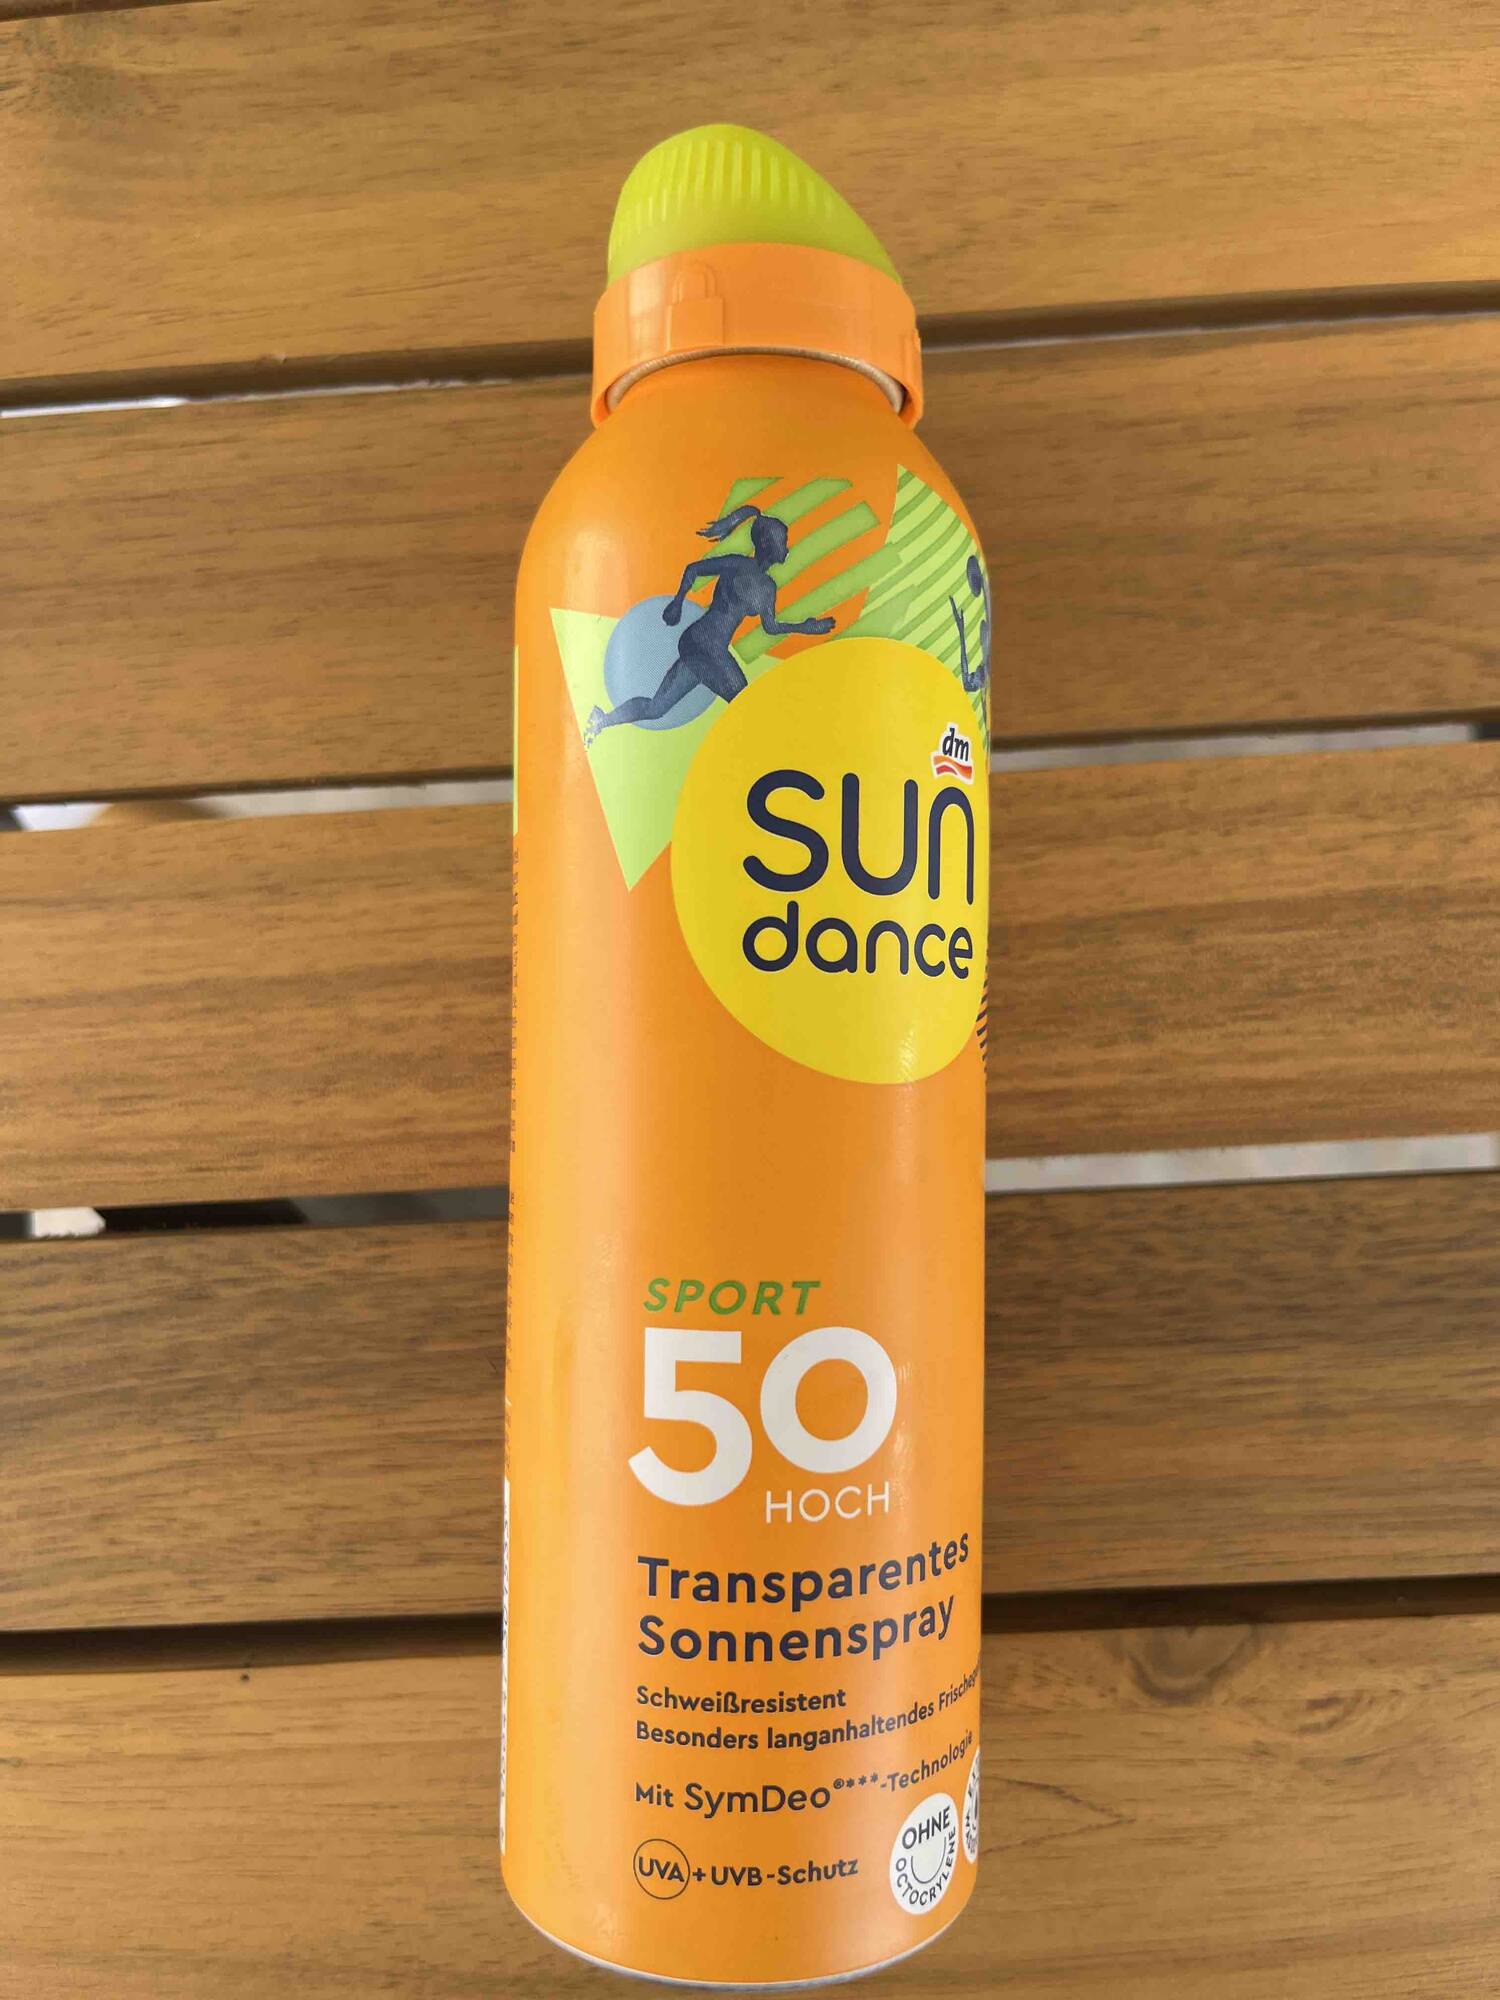 SUNDANCE - Sport - Transparentes sonnenspray 50 hoch